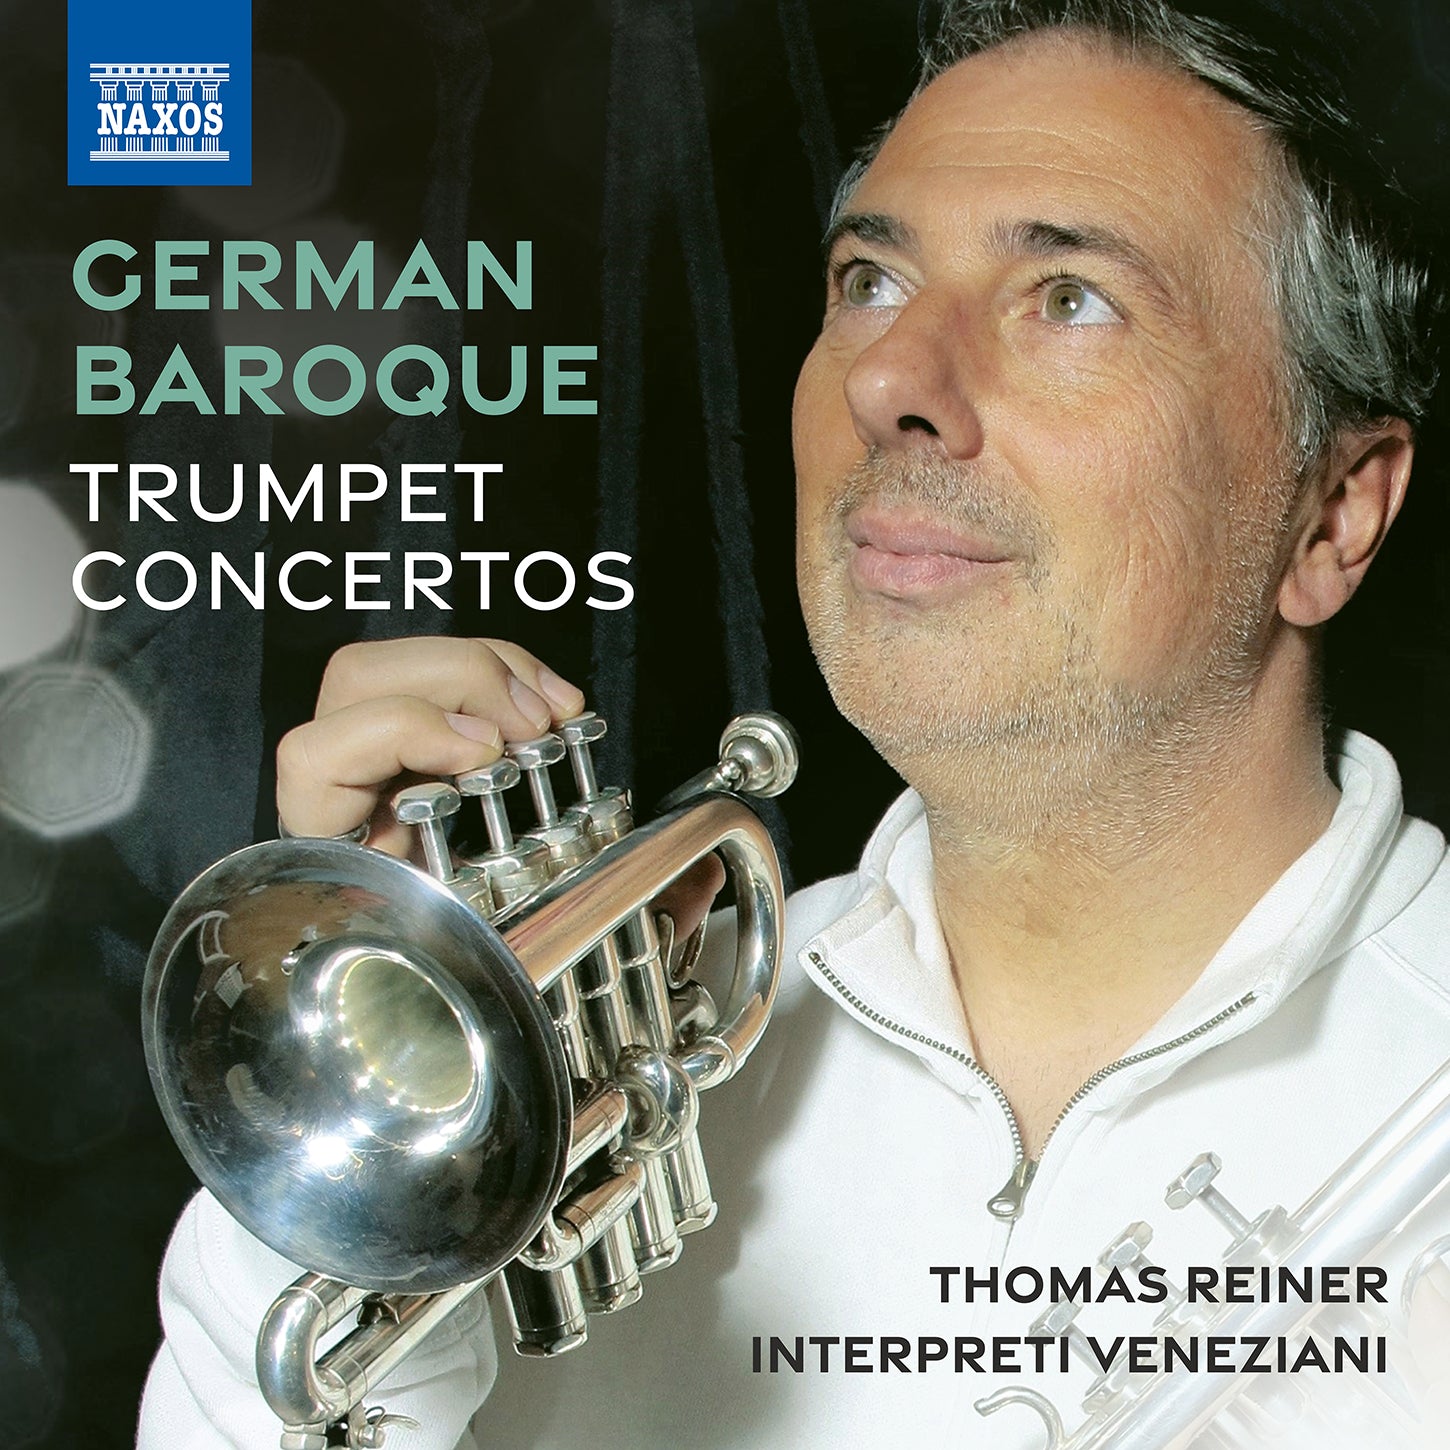 Stölzel, Telemann at al: German Baroque Trumpet Concertos / Reiner, Interpreti Veneziani